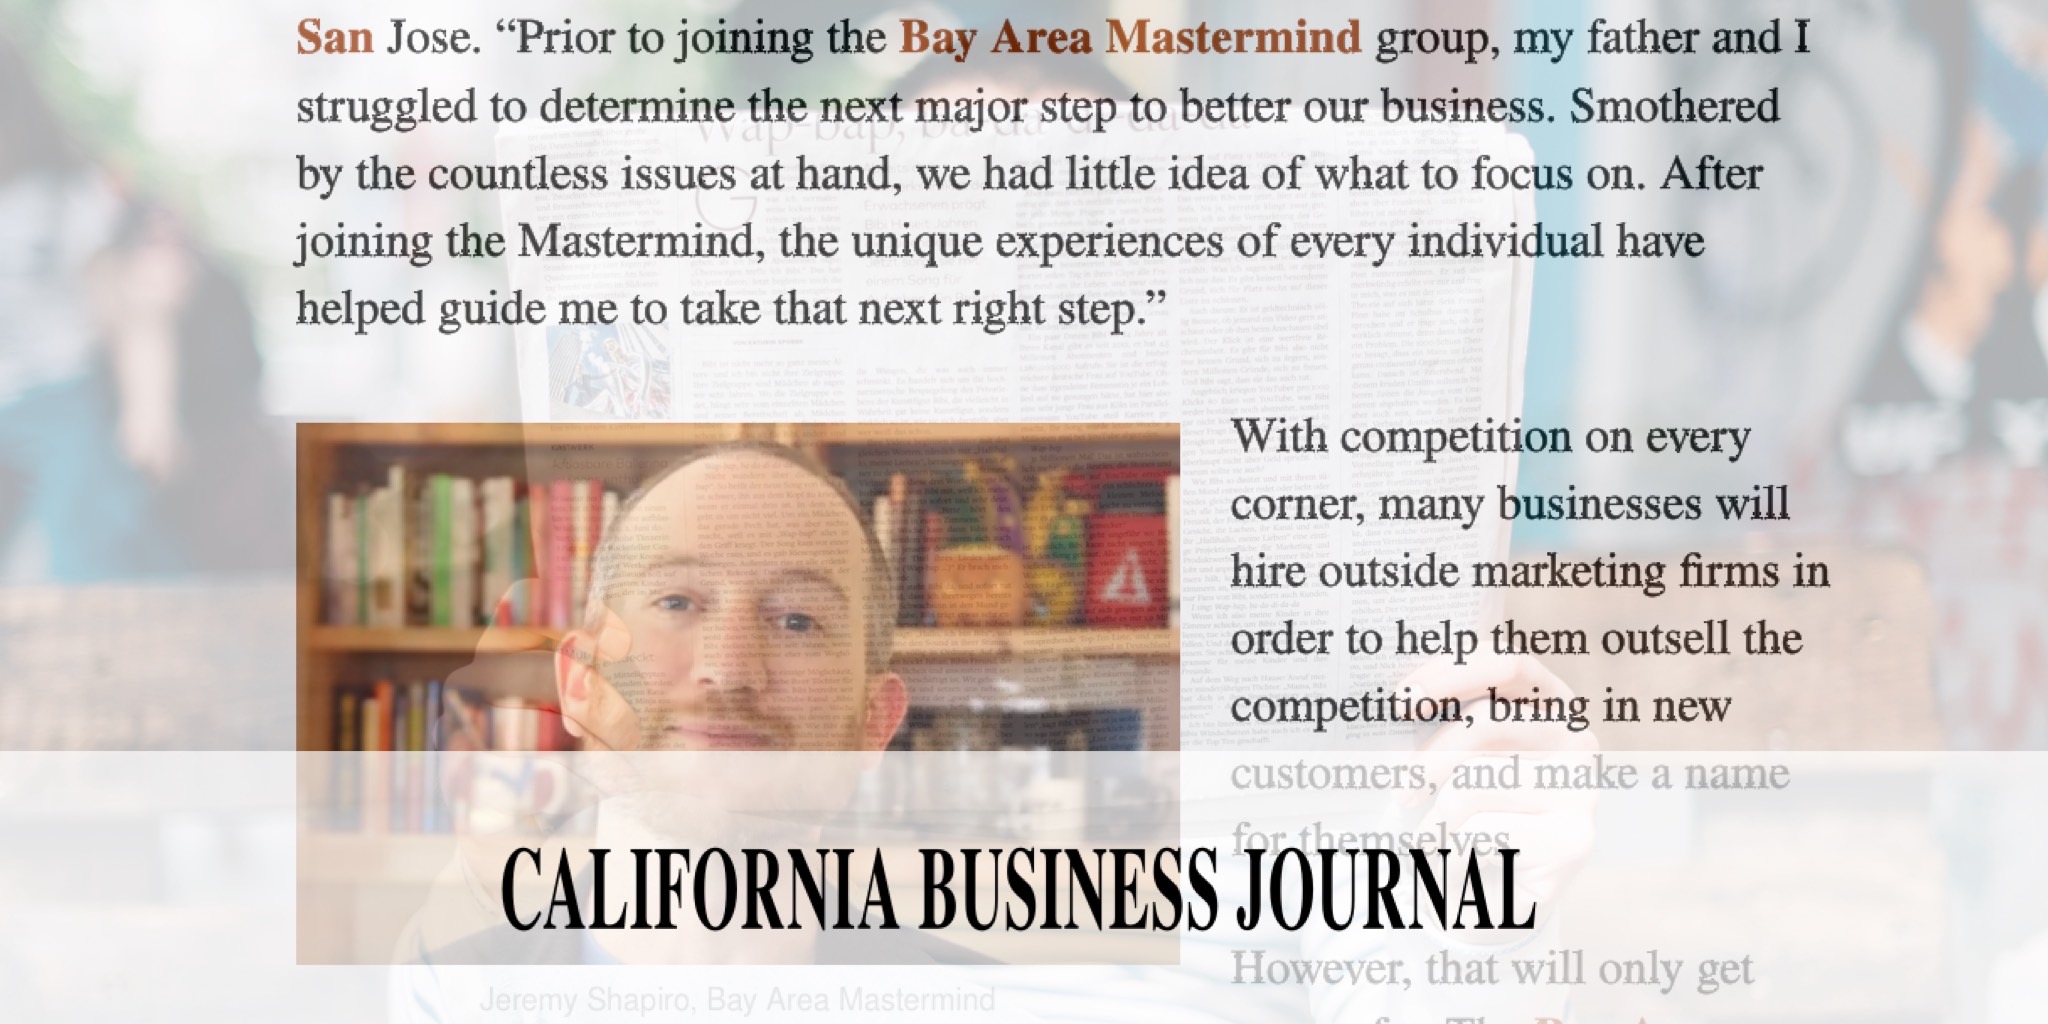 California Business Journal Profile on Bay Area Mastermind